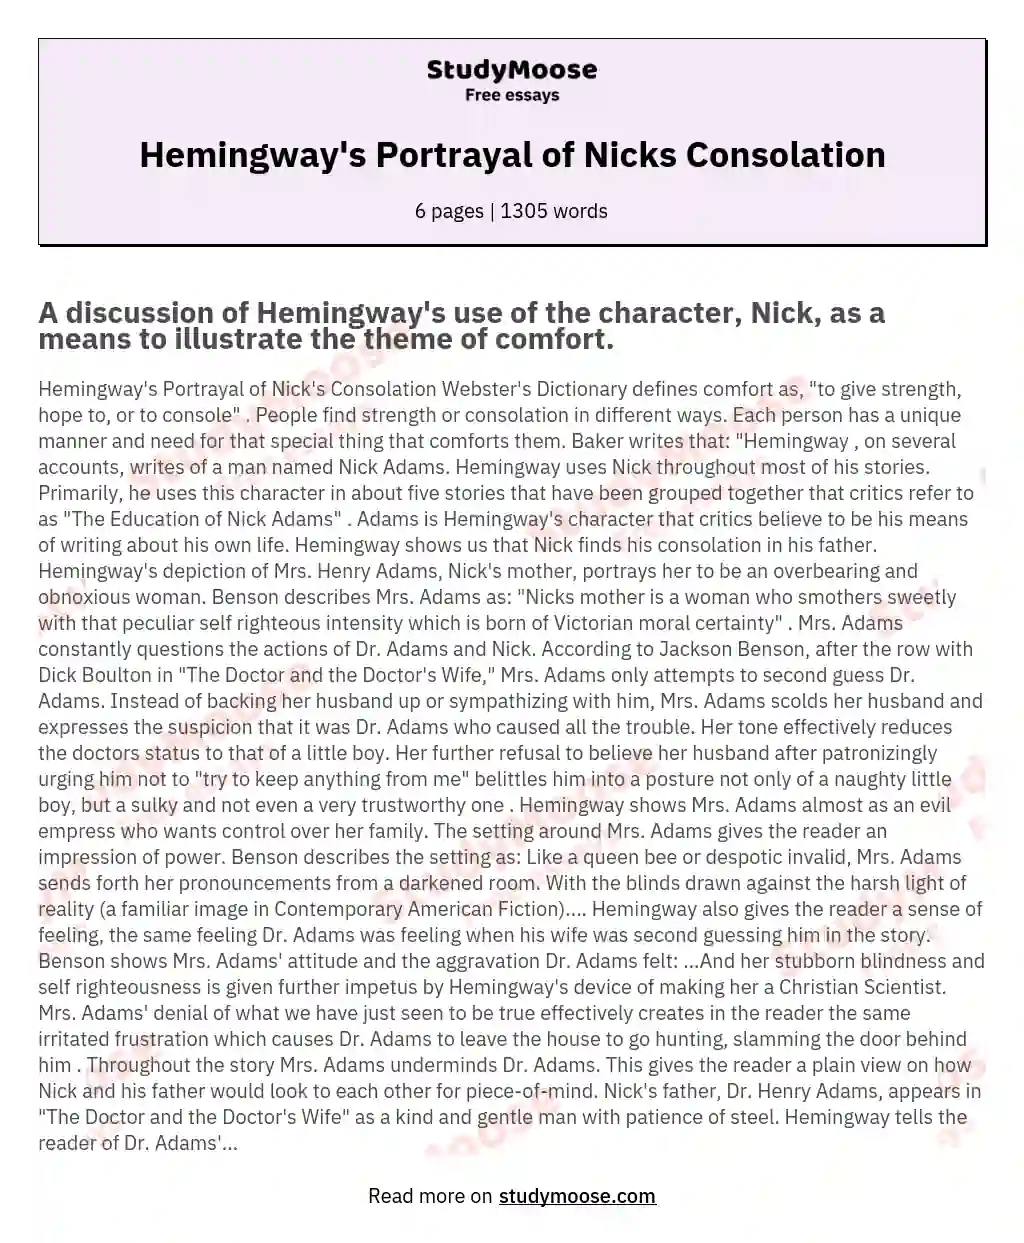 Hemingway's Portrayal of Nicks Consolation essay